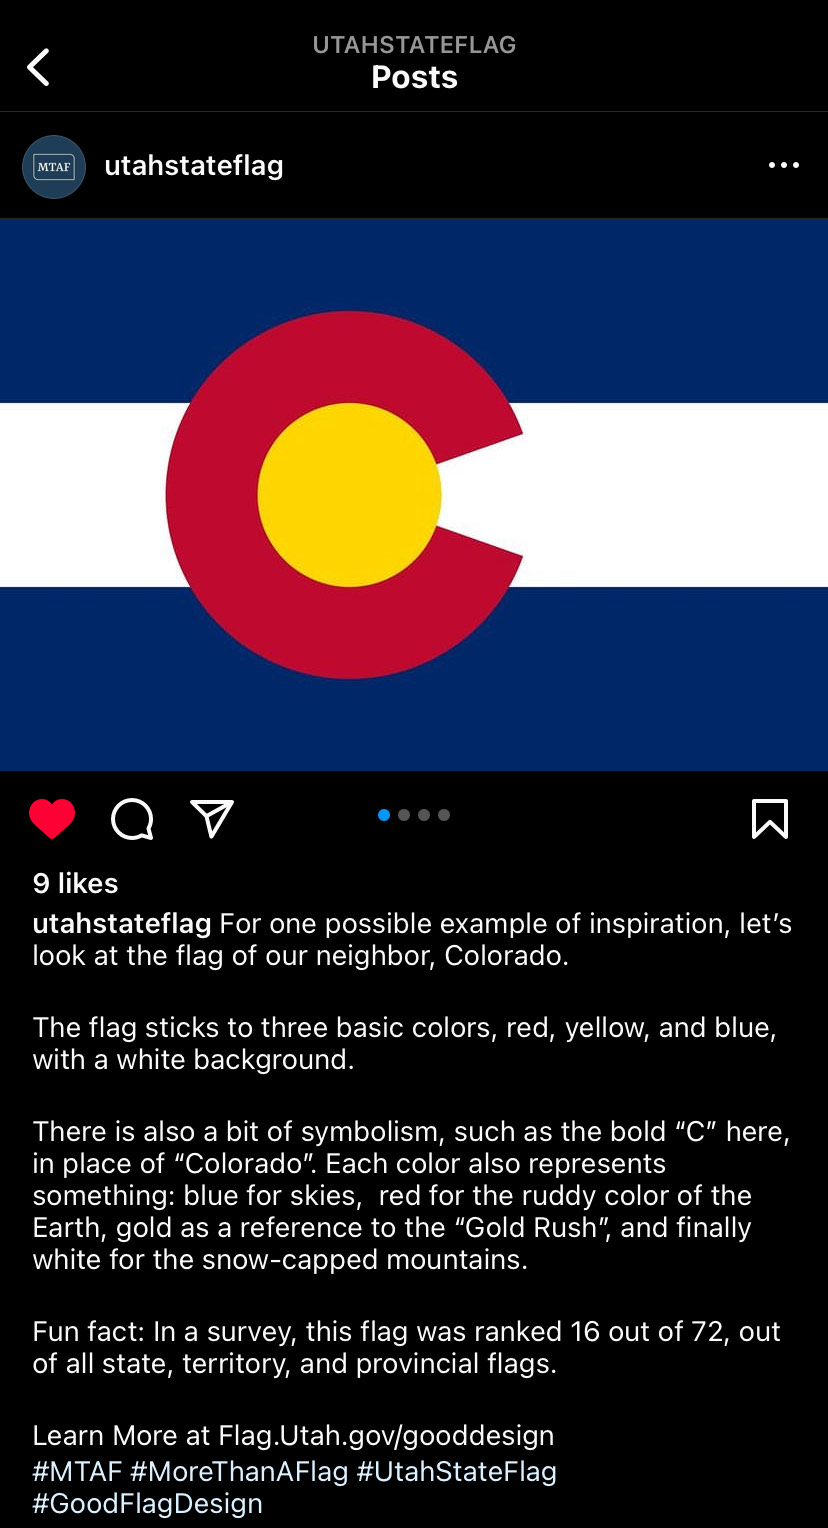 Utah State Flag social media post